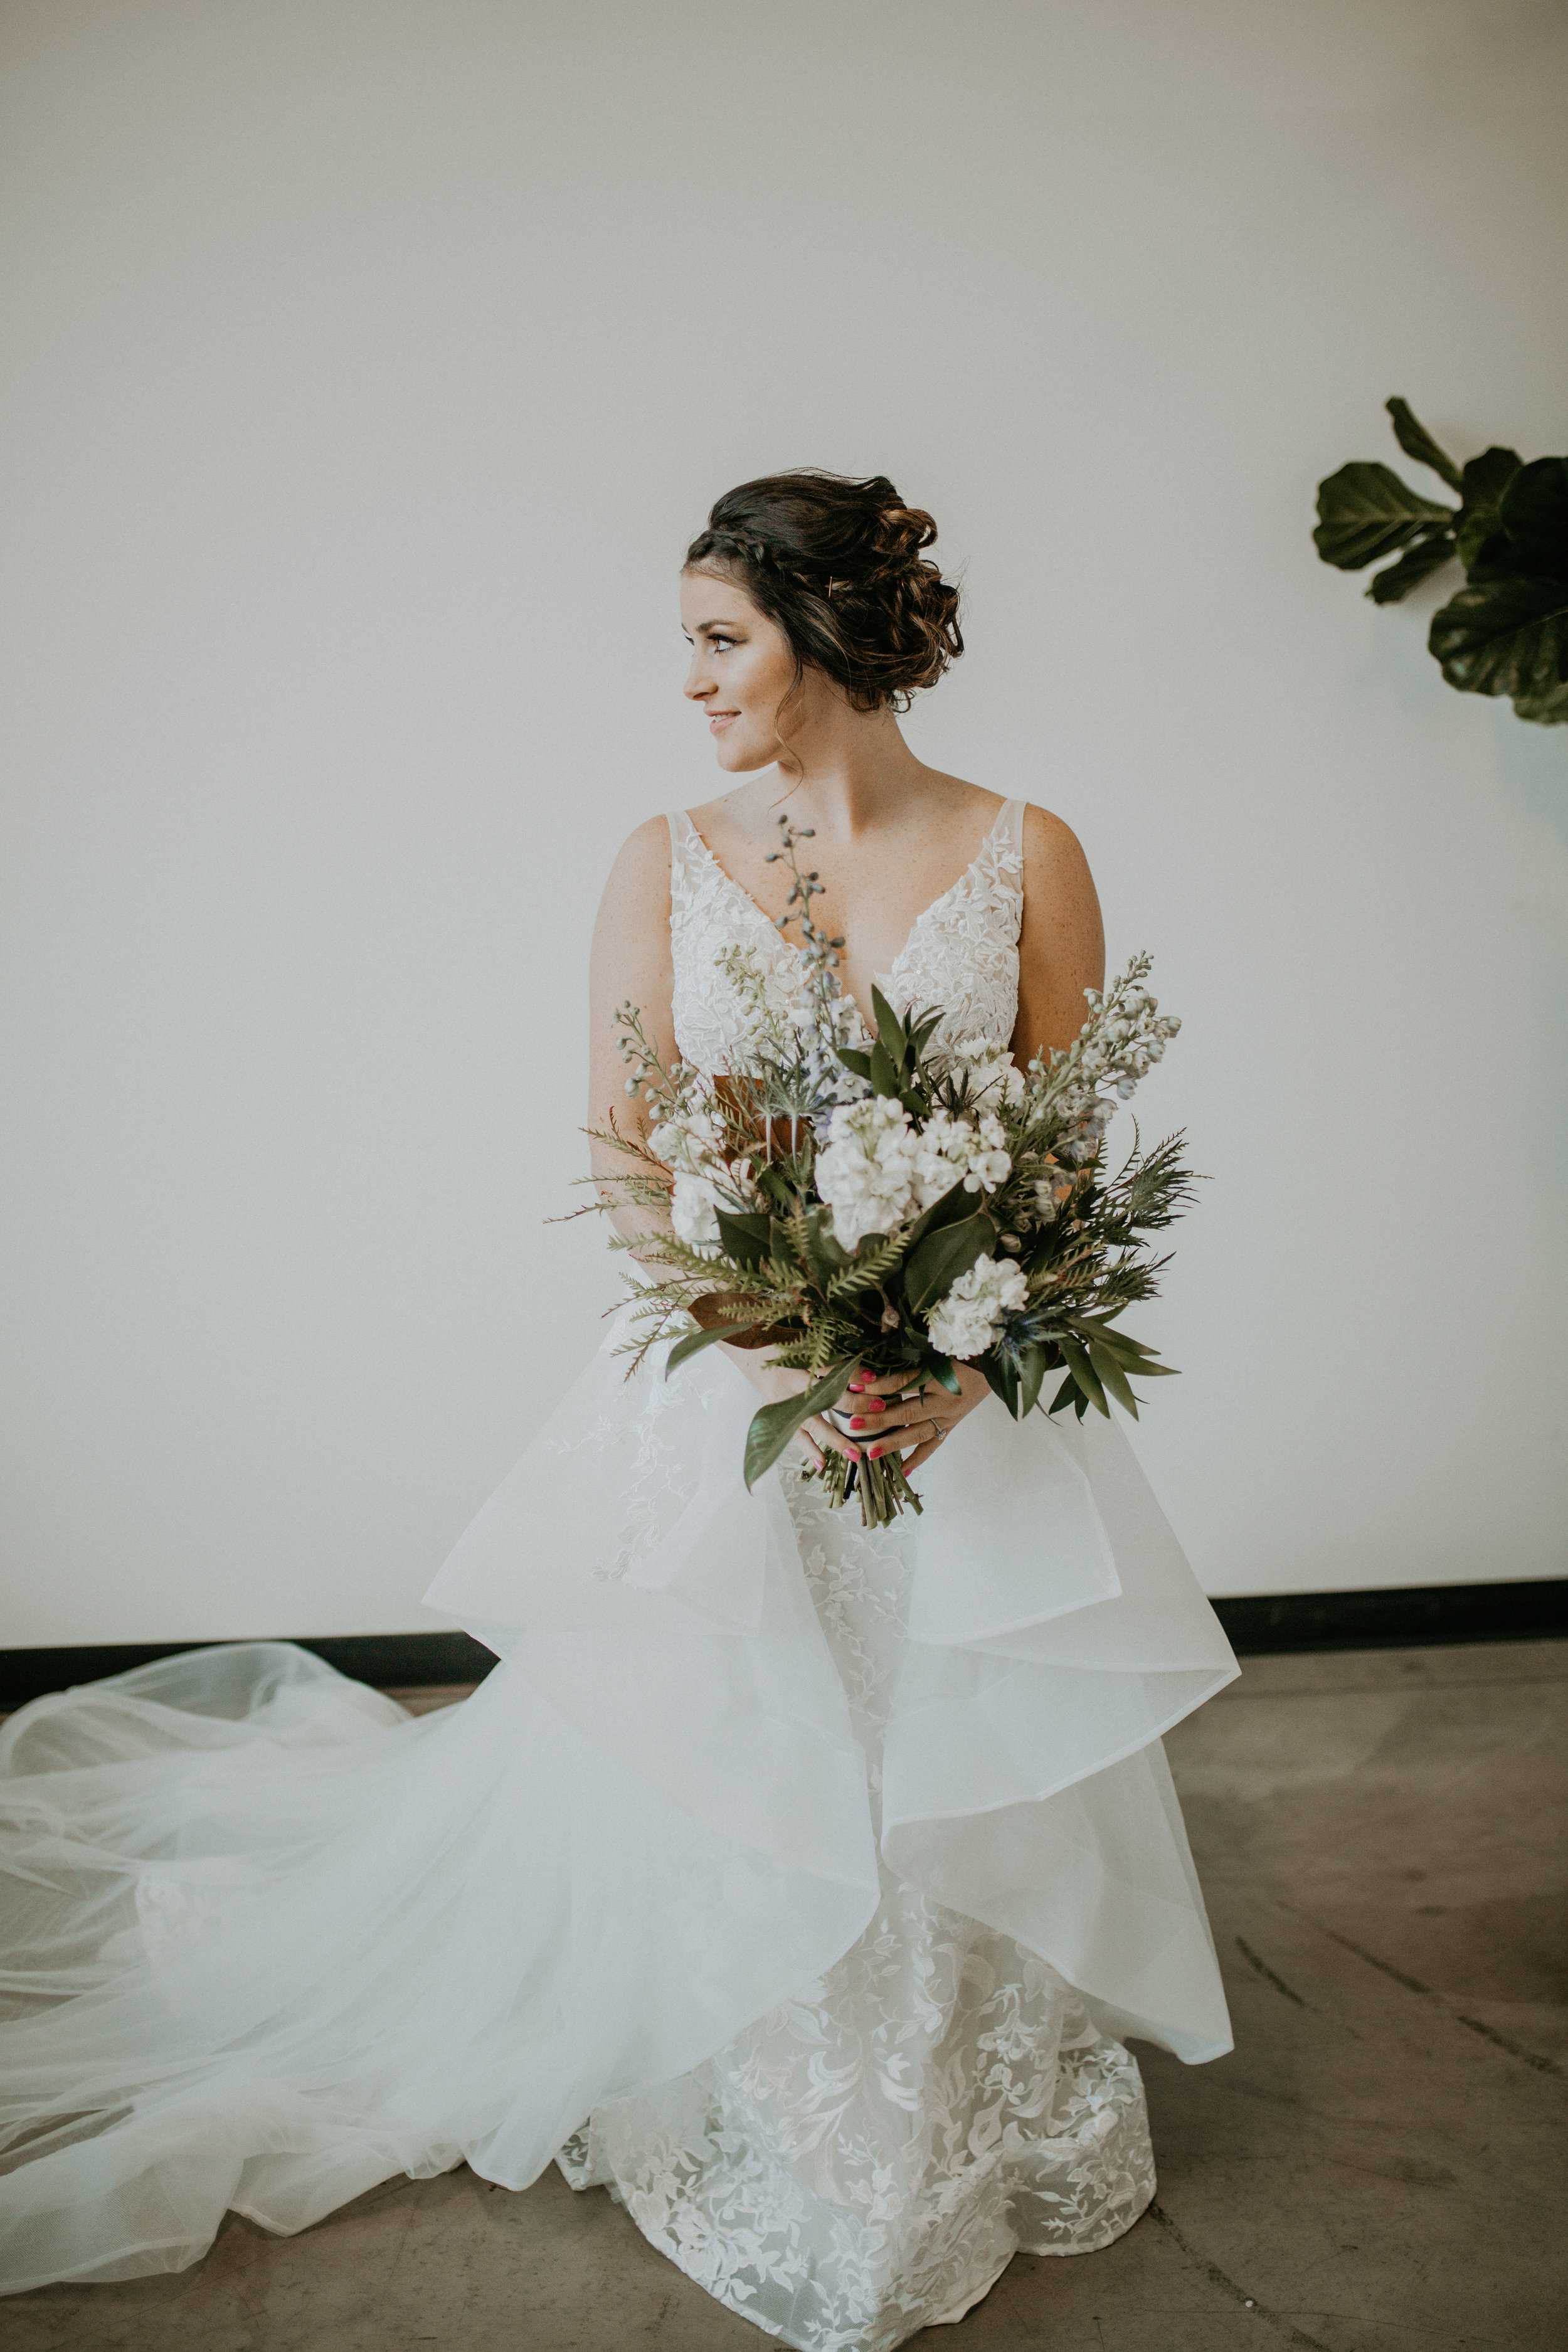 Spokane wedding dress photo shoot Honest in Ivory